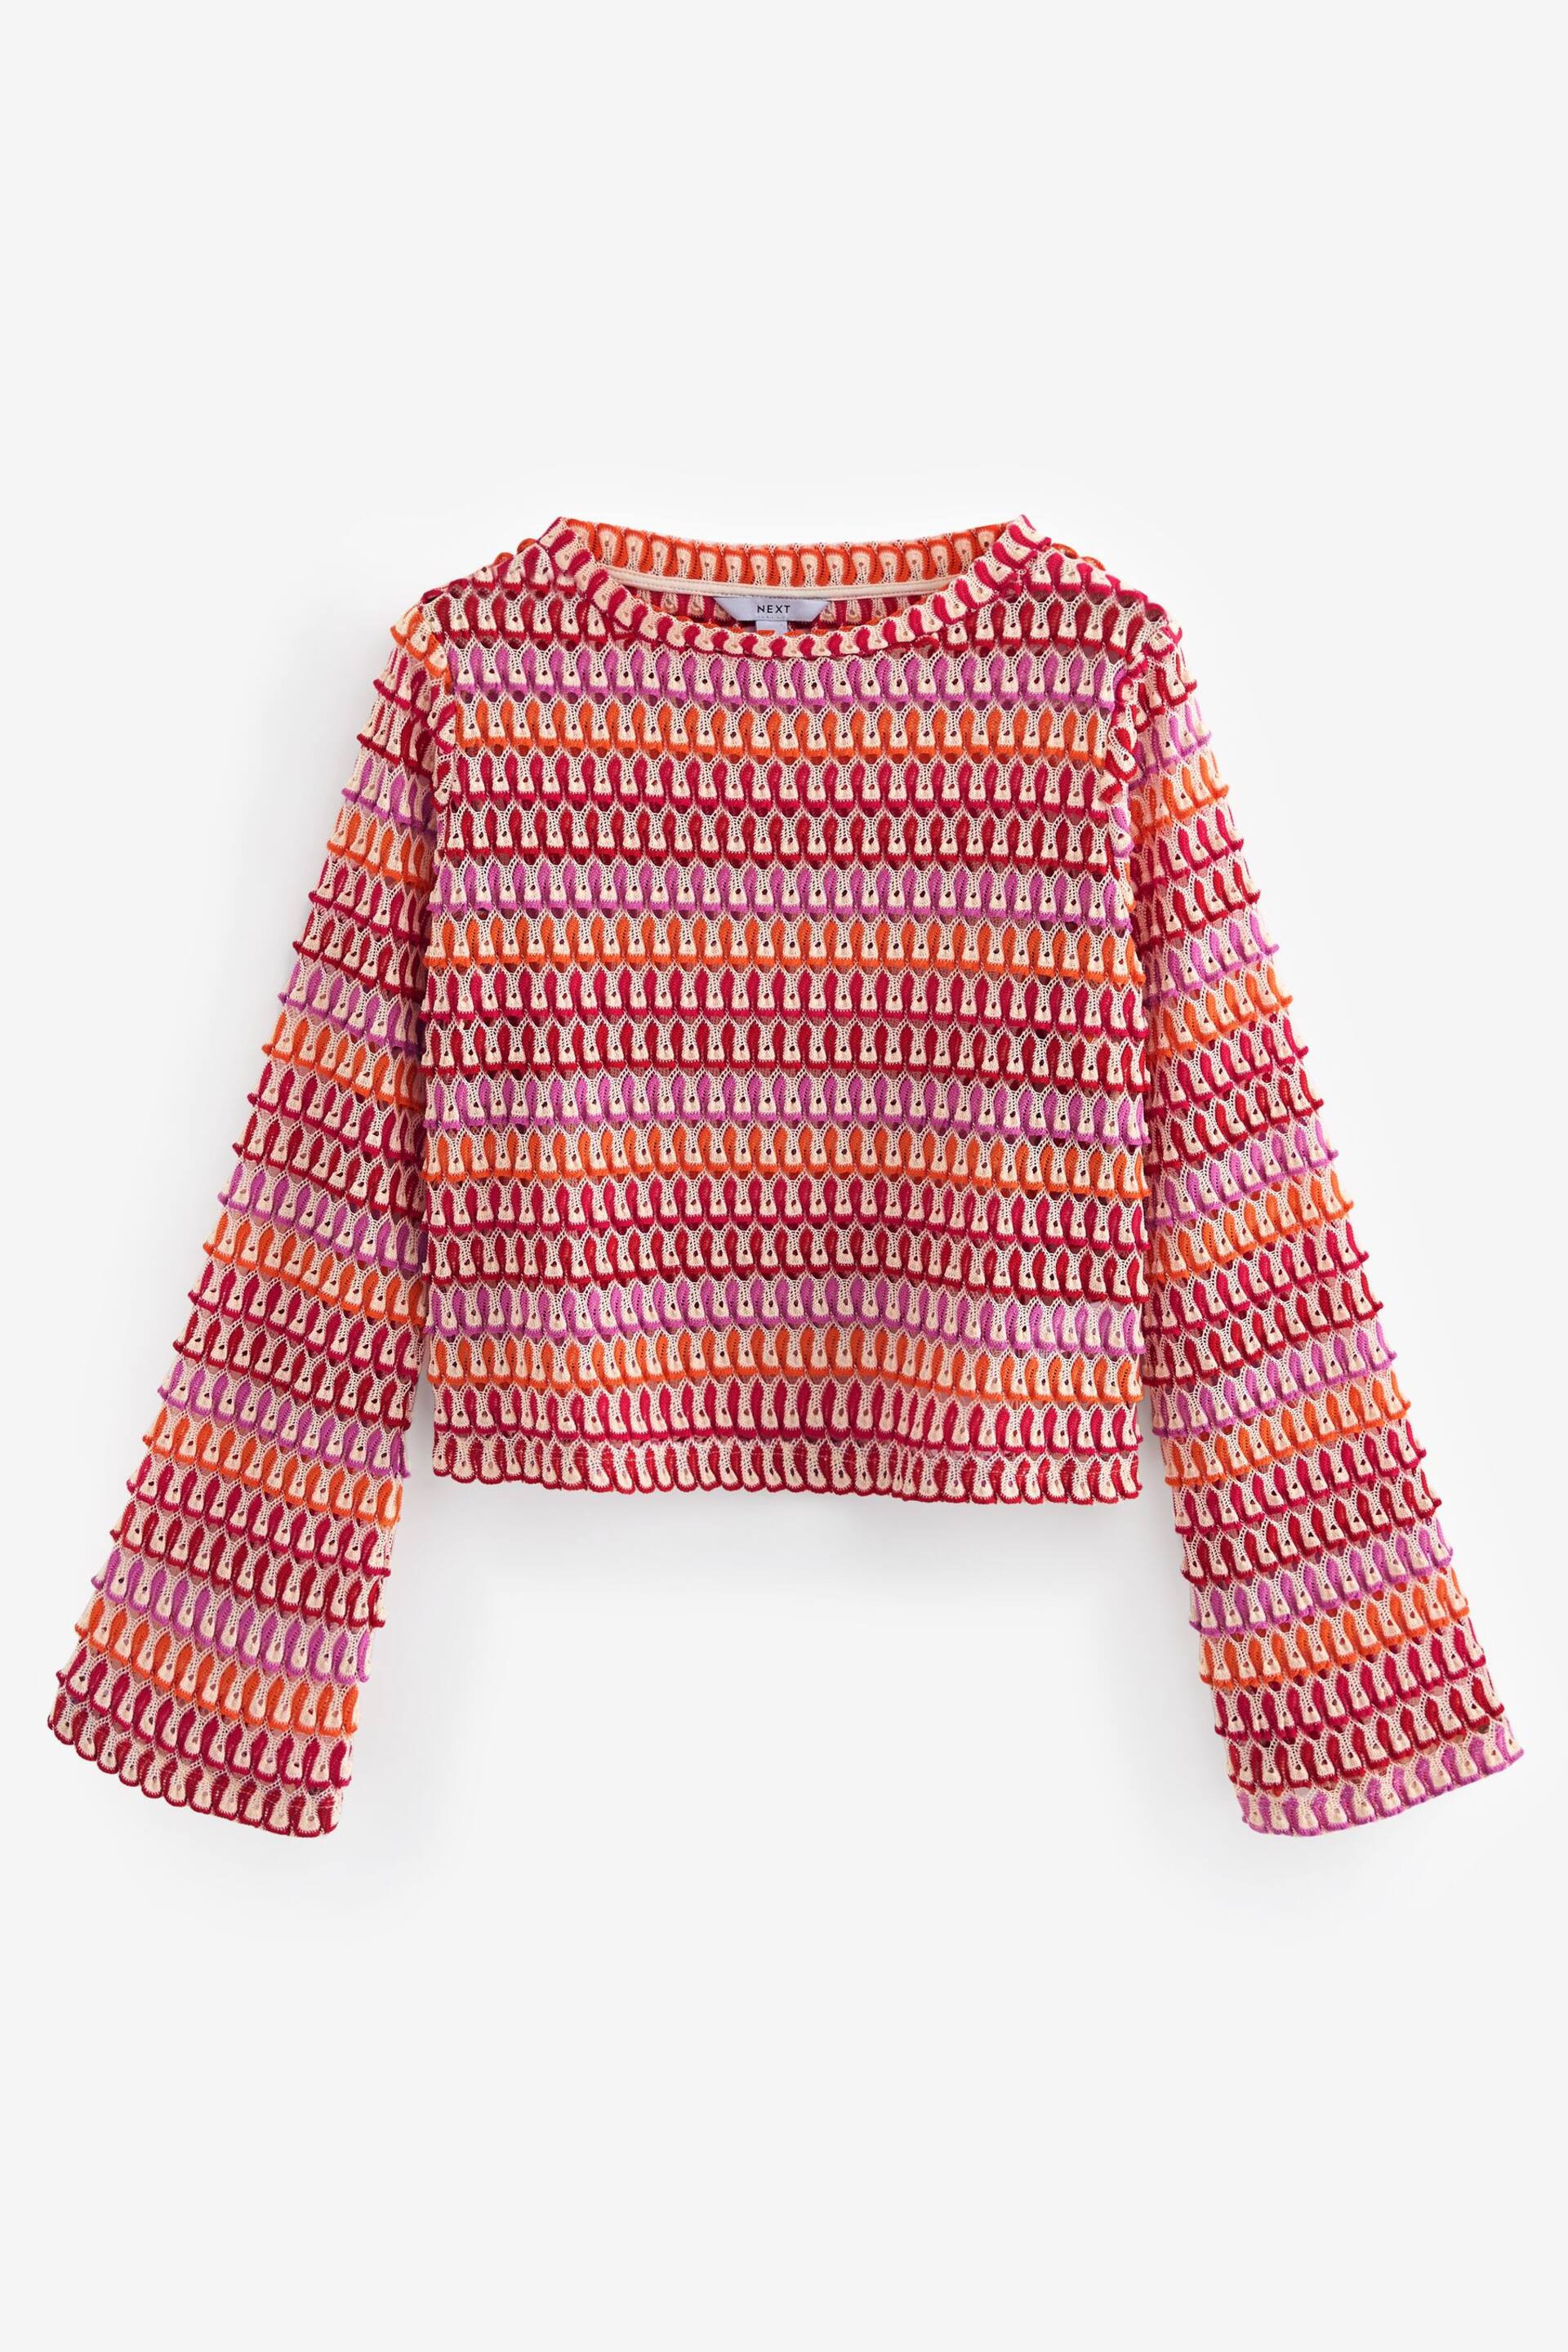 Pink/Orange Long Sleeve Crochet Top - Image 5 of 6